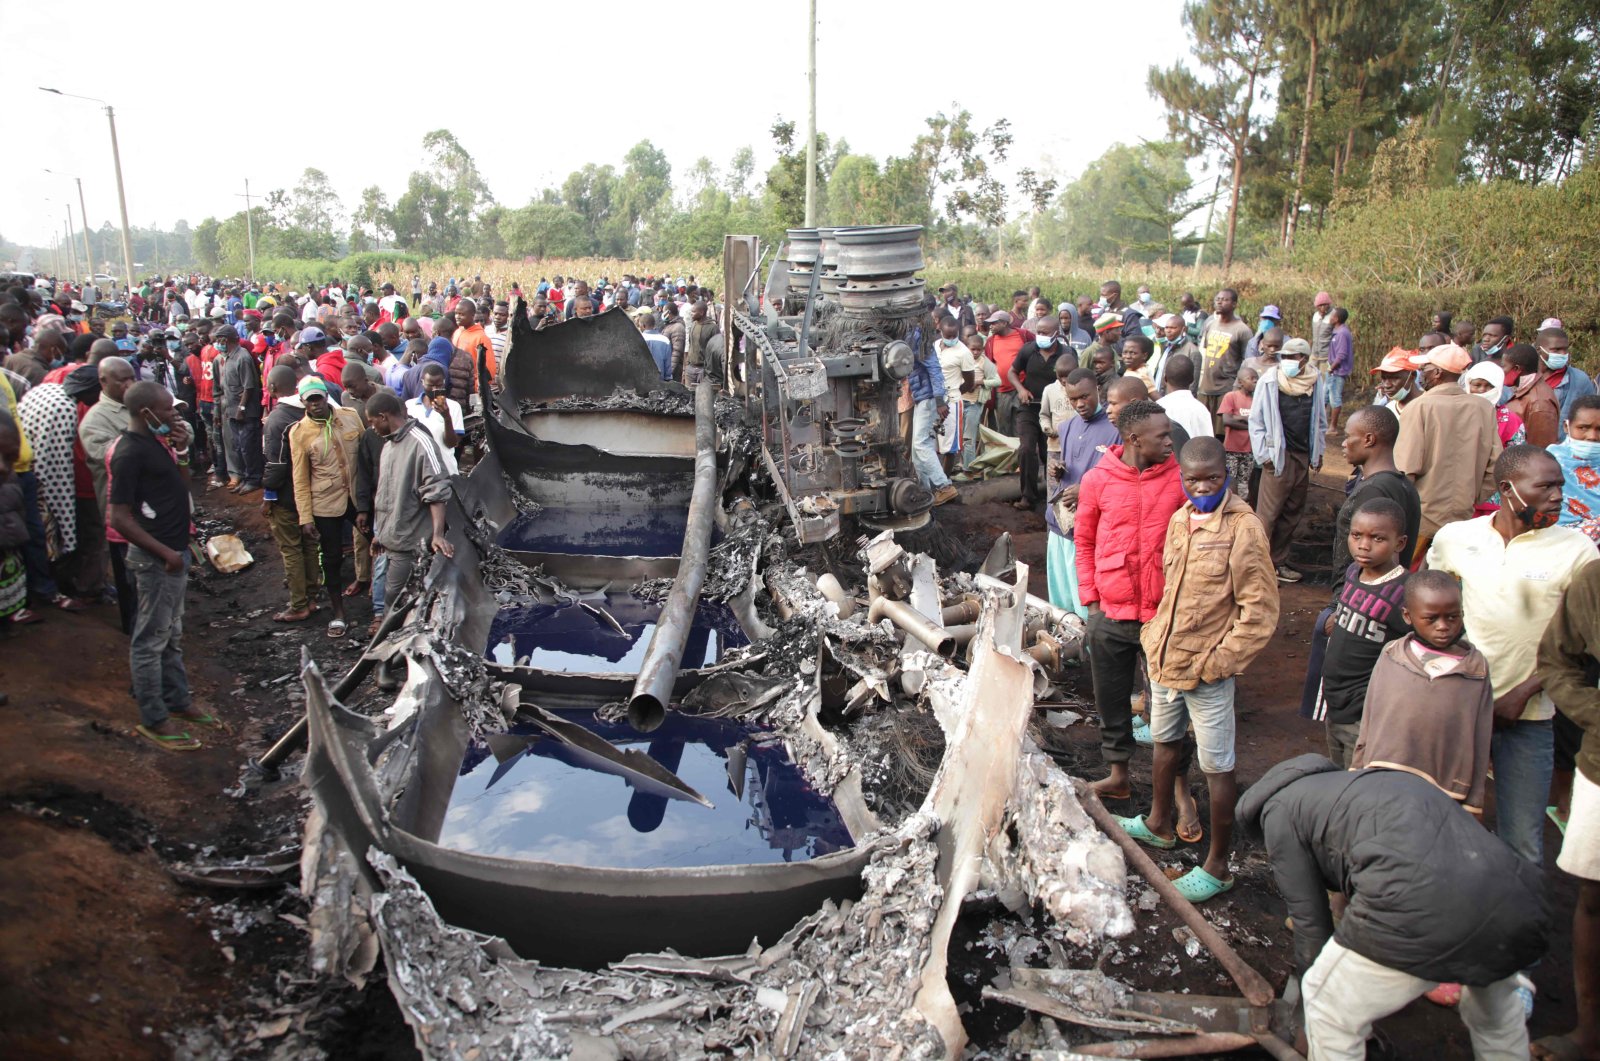 Petrol tankers explode in Kenya, killing 13 people